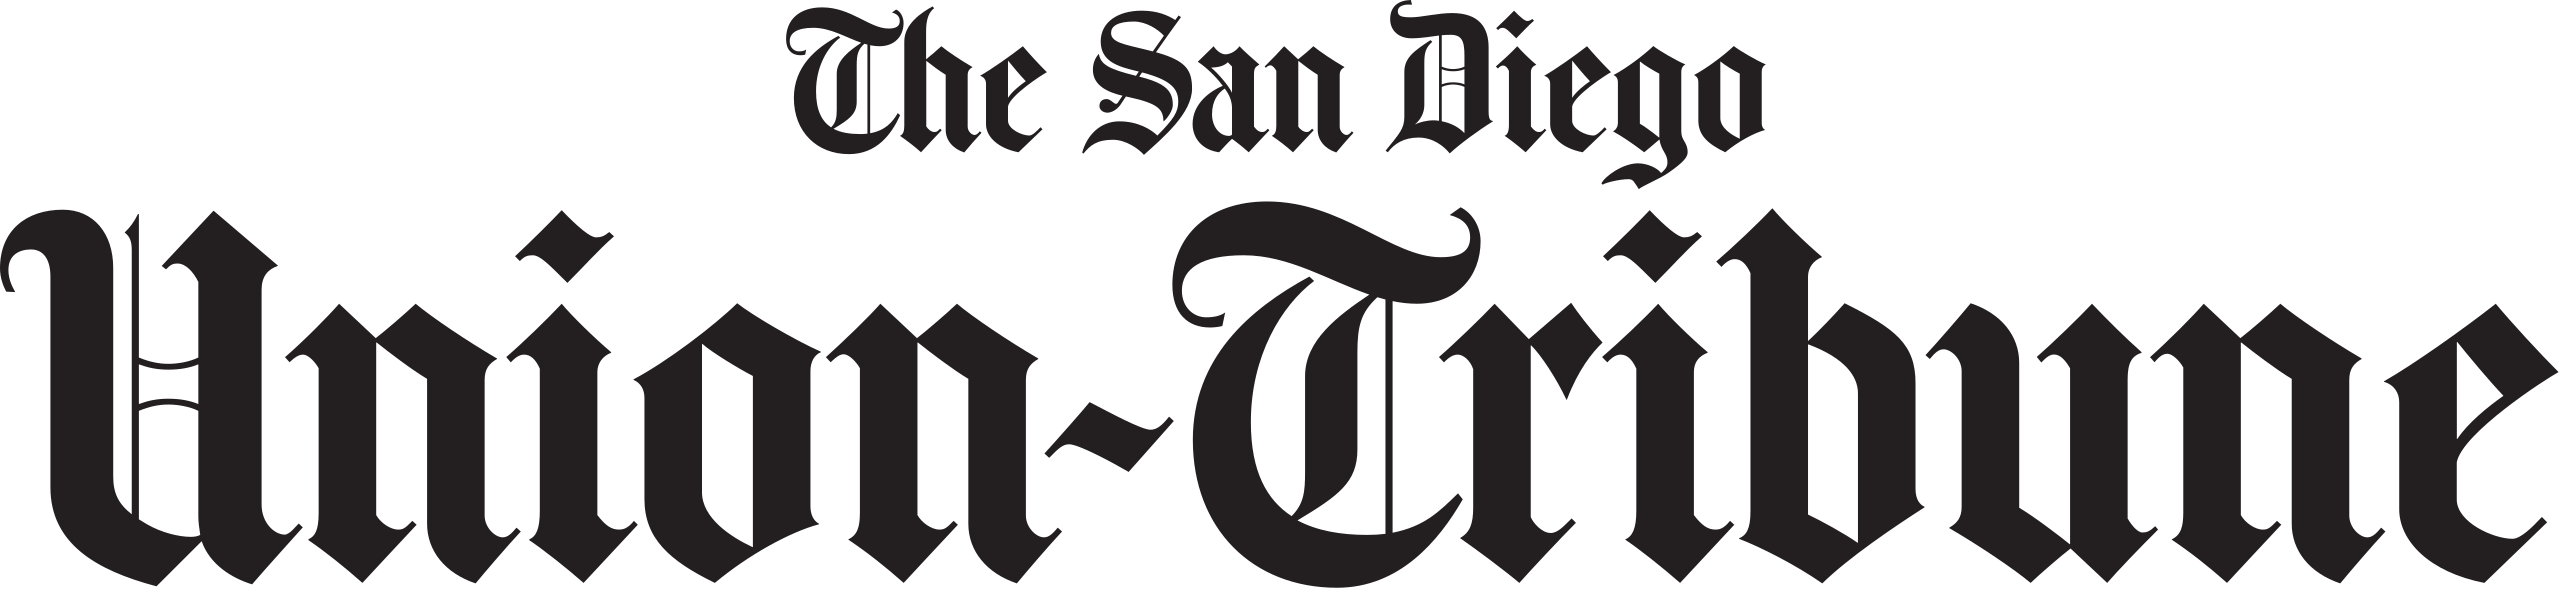 File:The San Diego Union-Tribune.svg - Wikimedia Commons